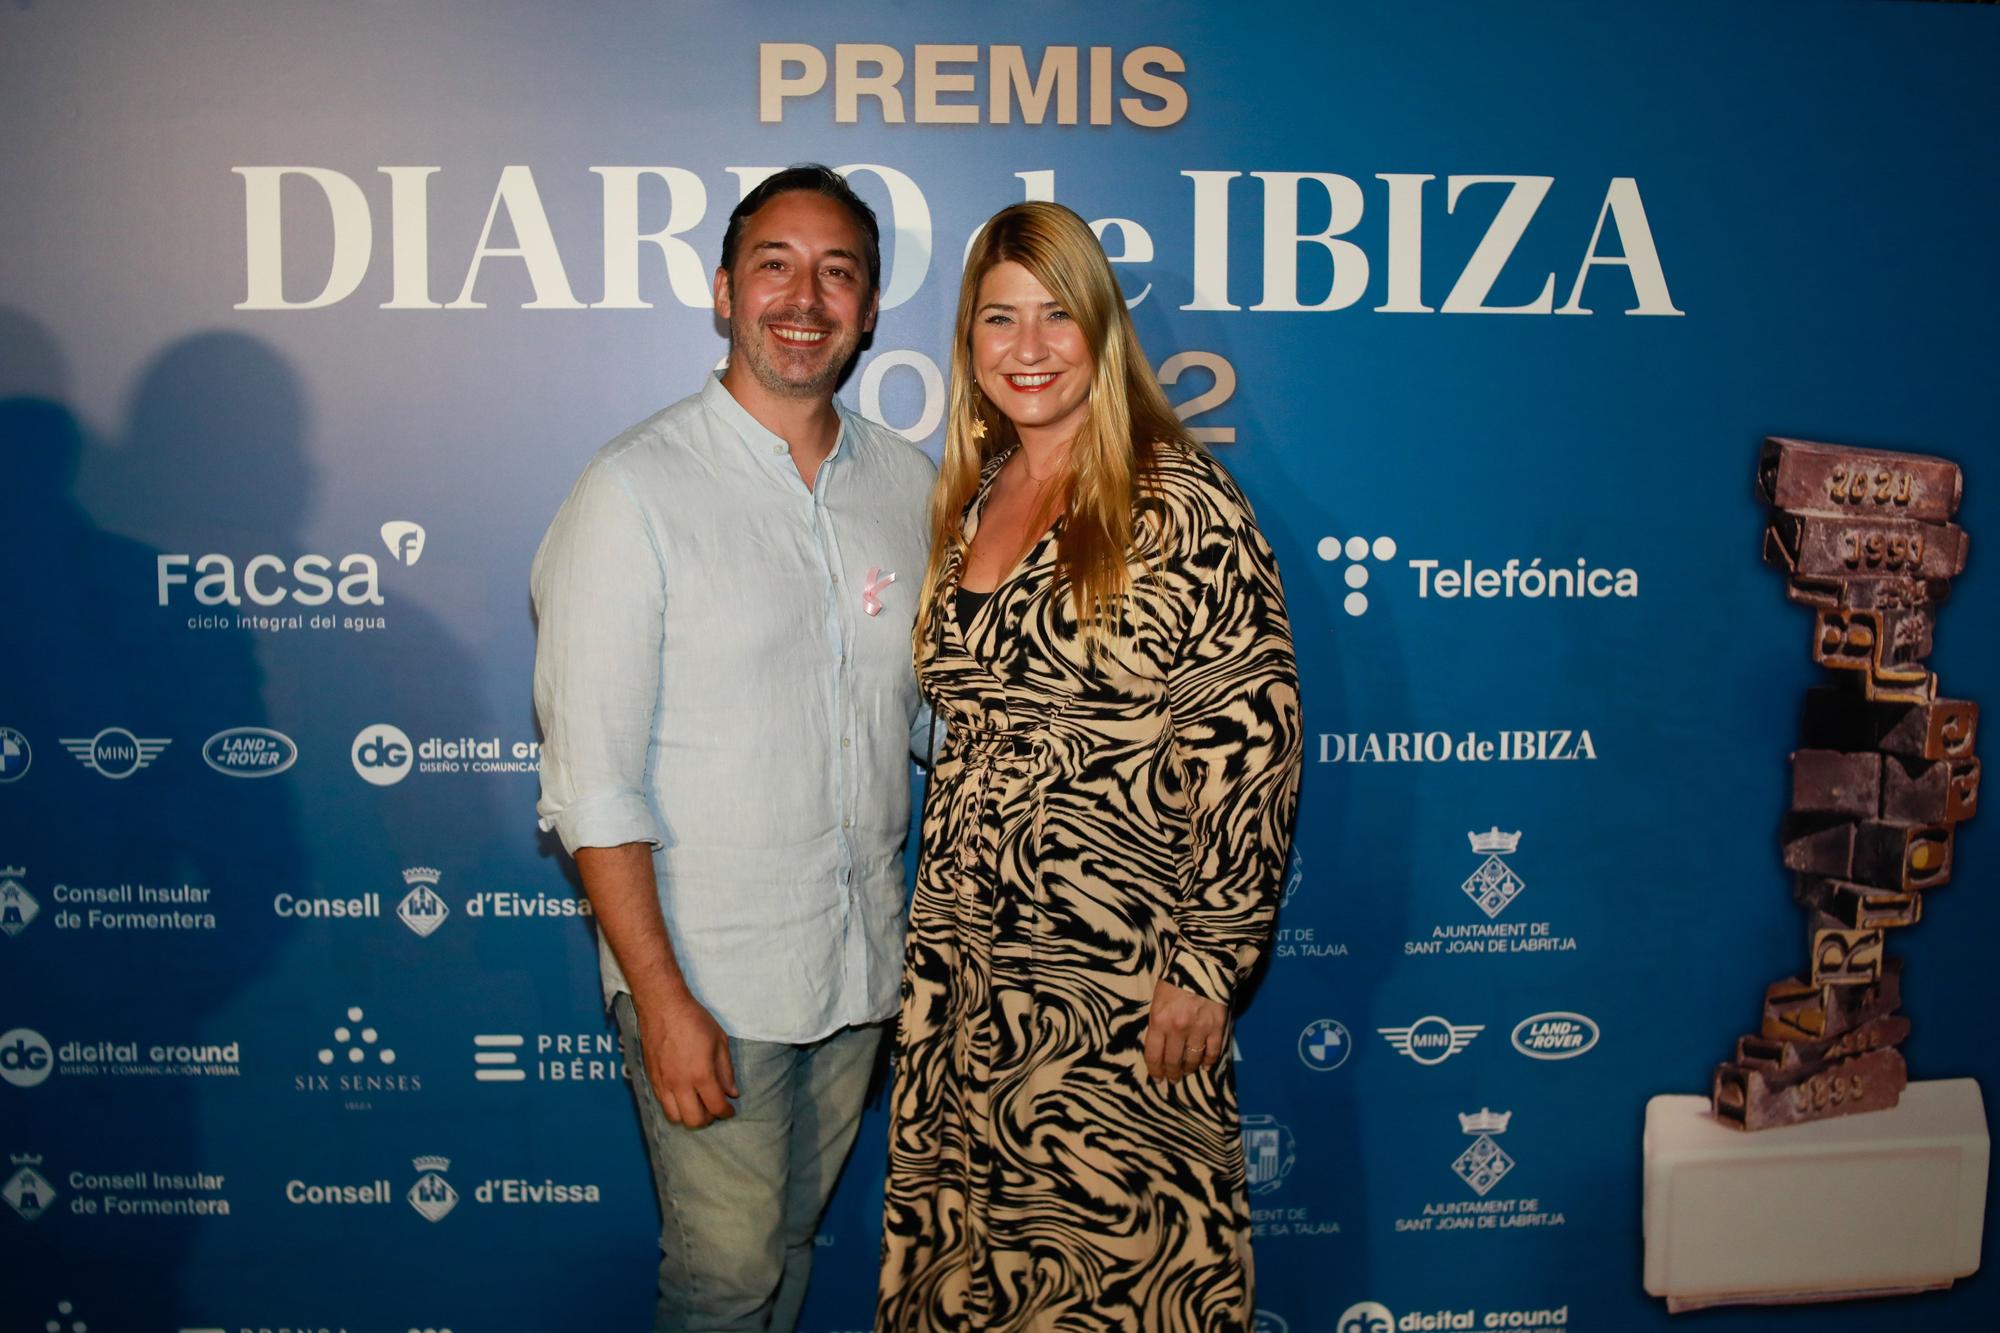 Premis Diario de Ibiza 2022